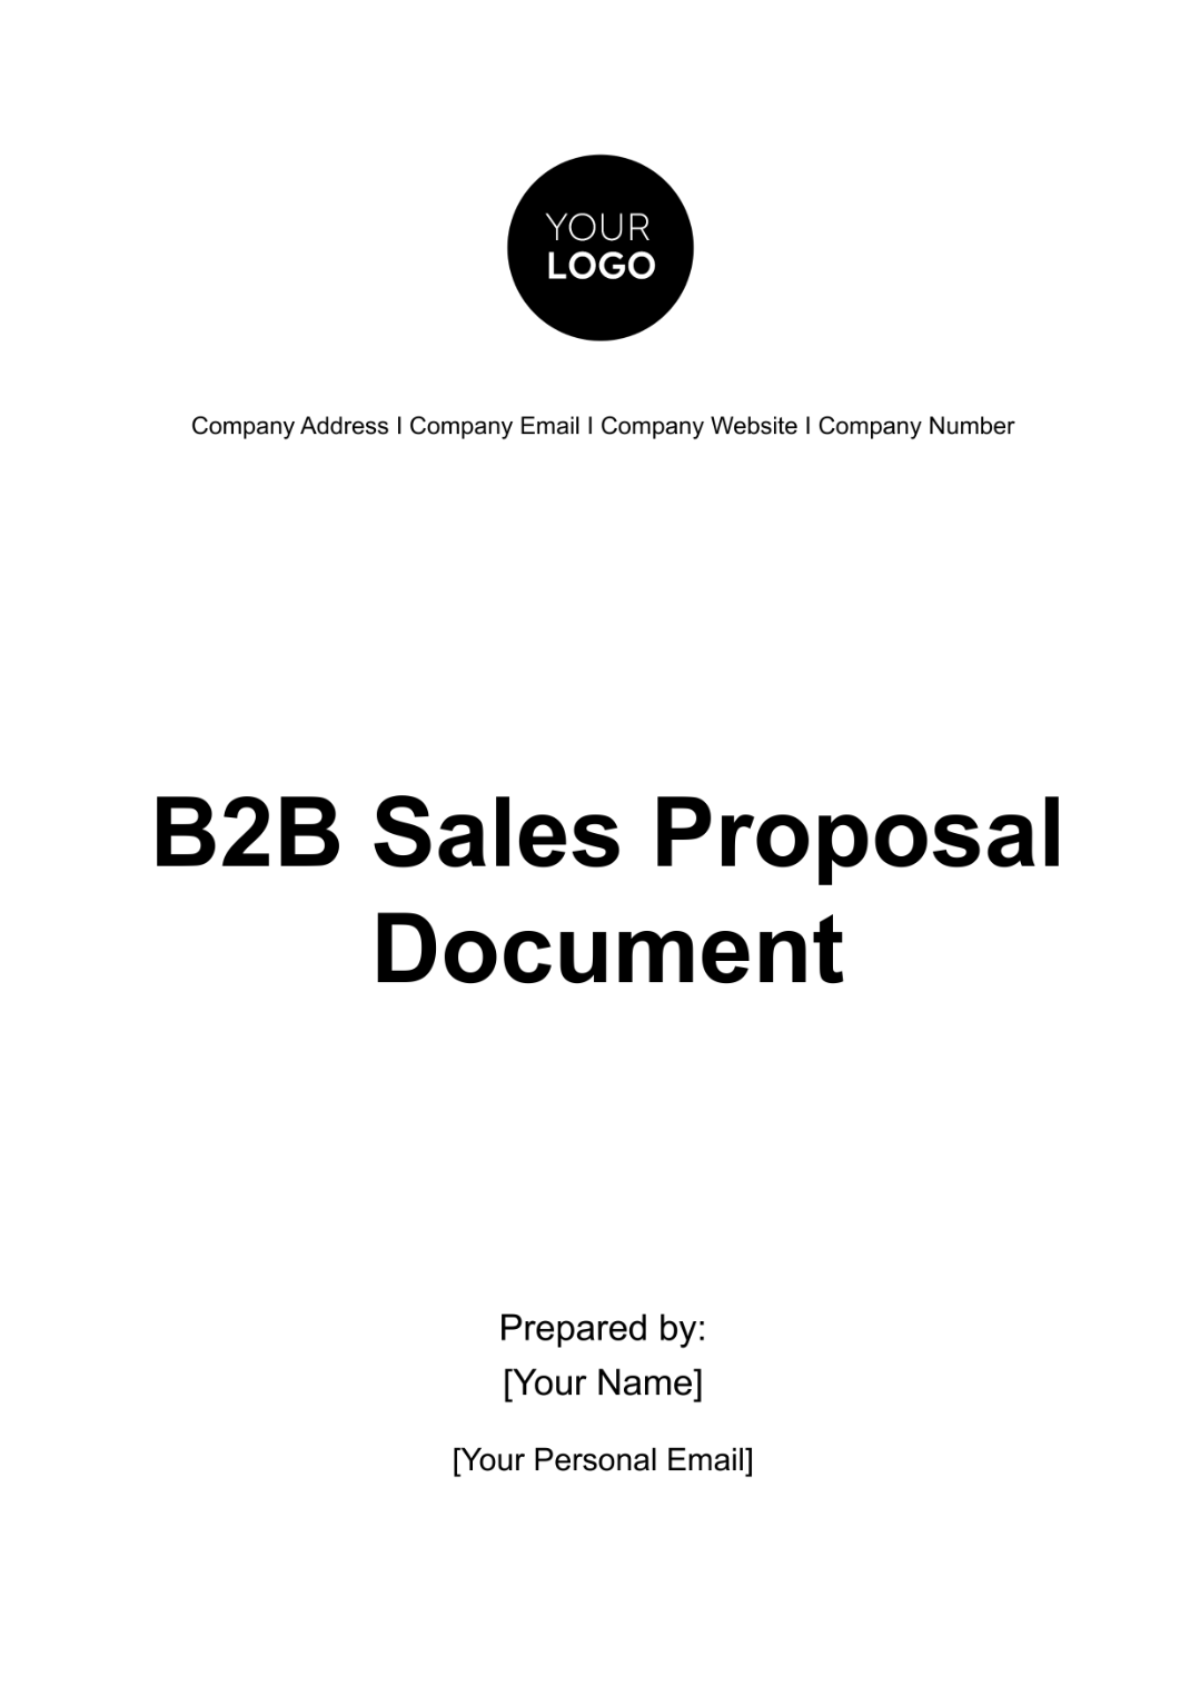 B2B Sales Proposal Document Template